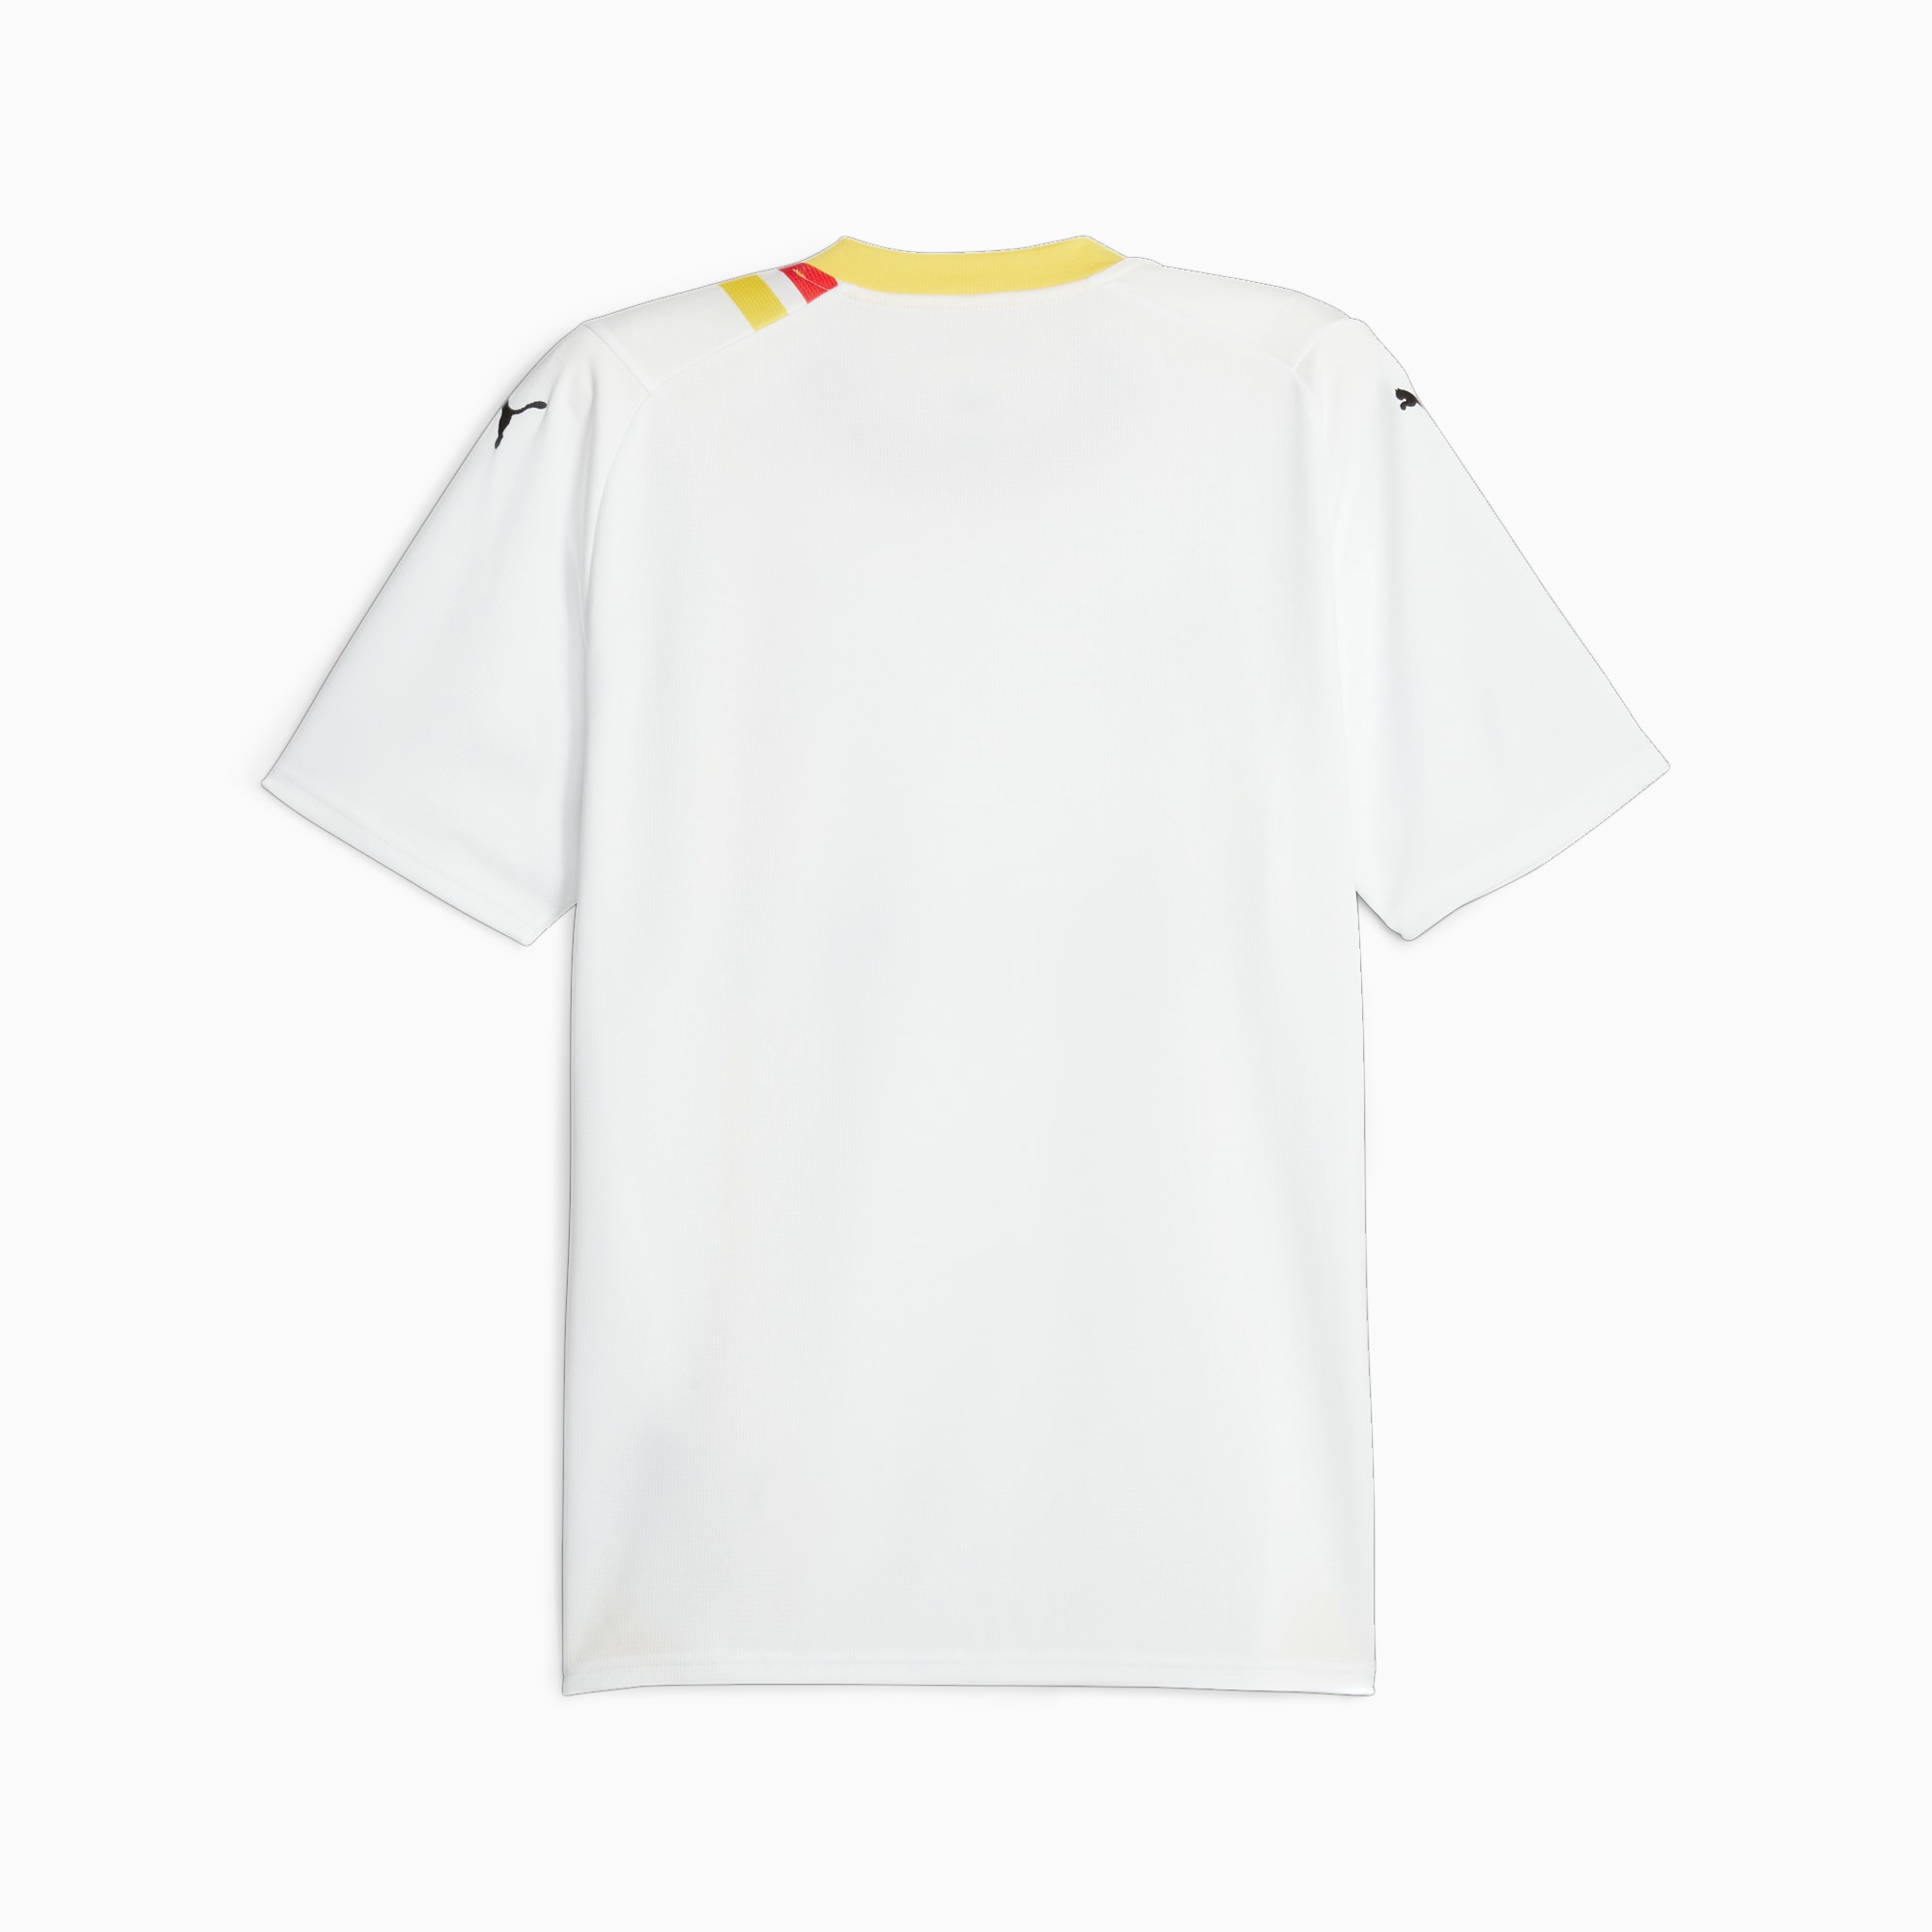 PUMA Rc Lens Third Jersey Men, White/Pelé Yellow, Size XL, Clothing